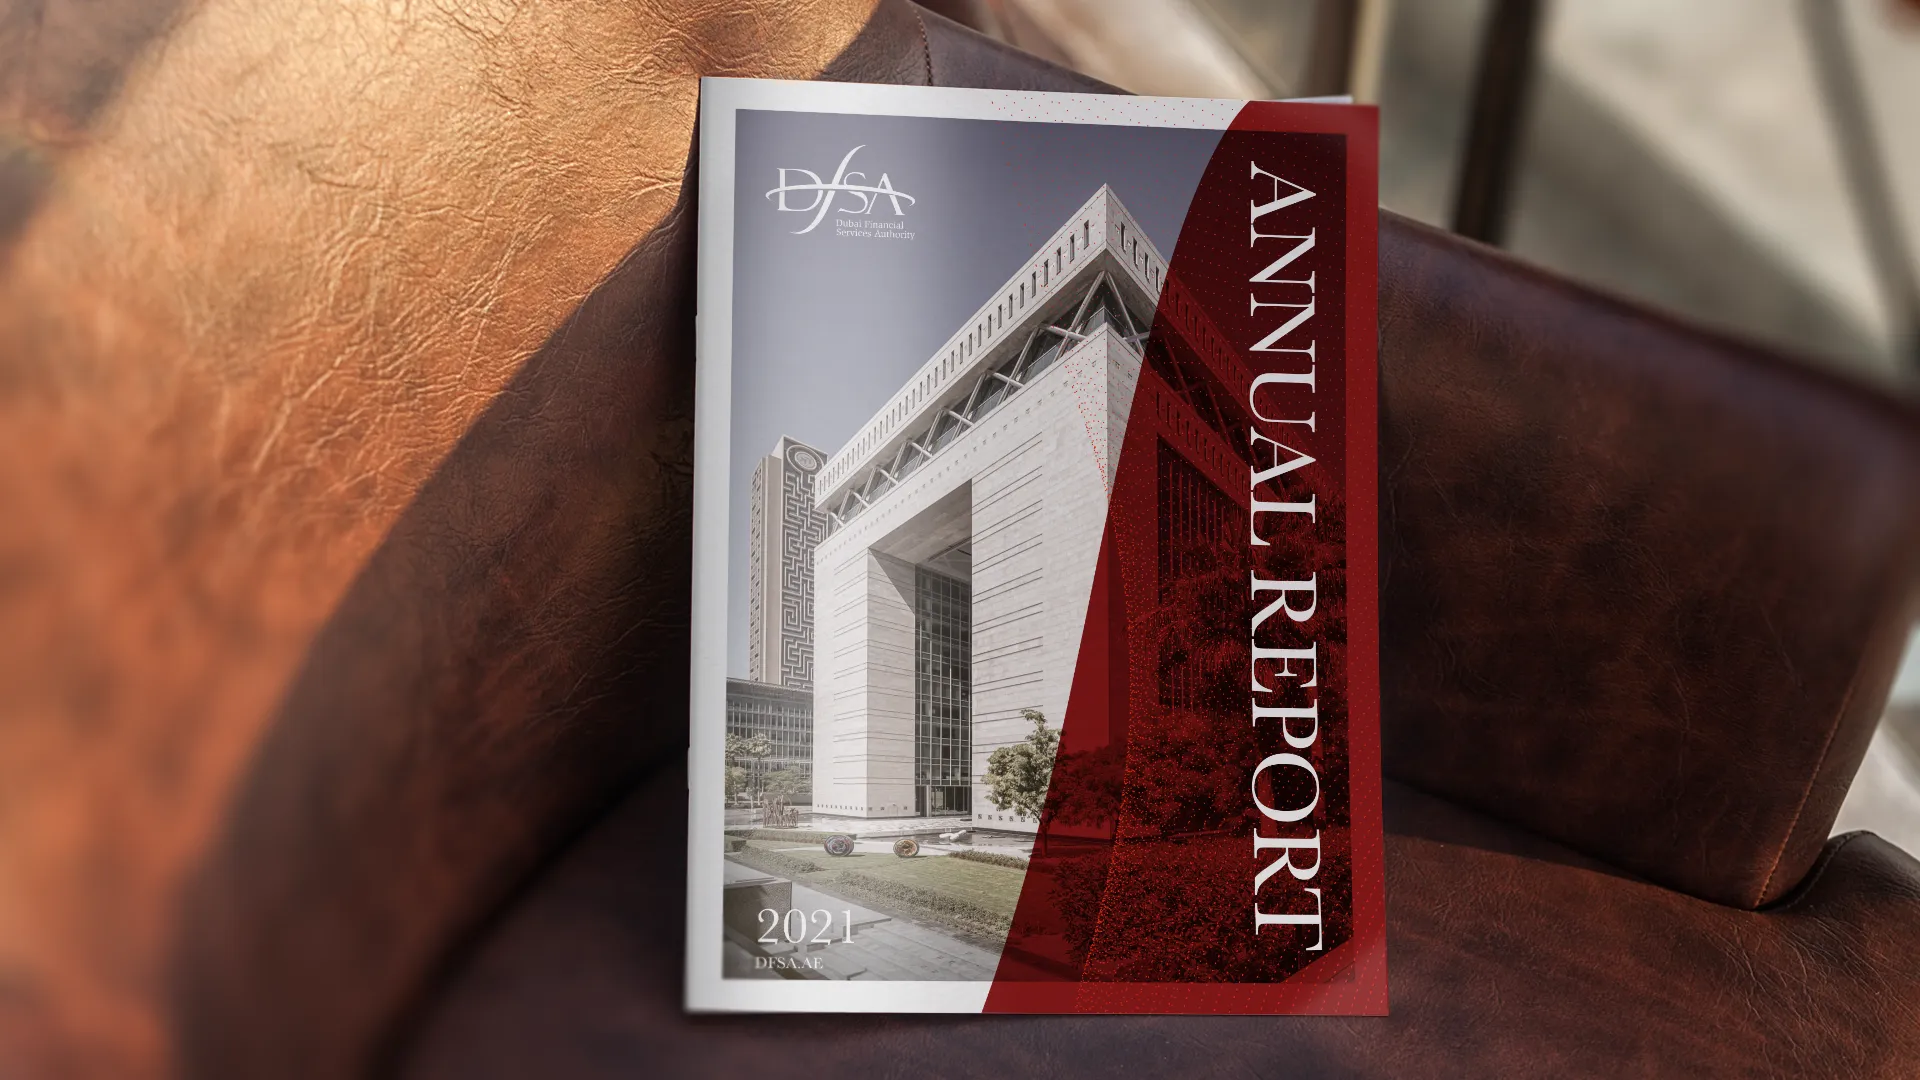 Dubai Financial Services Authority Annual Report